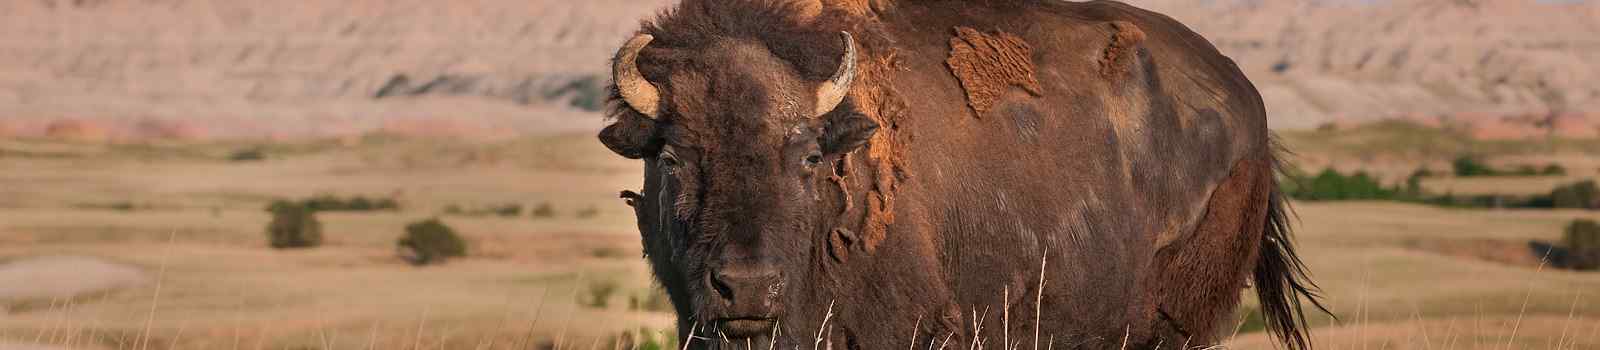 -Badlands American Bison Bull shutterstock 115927624